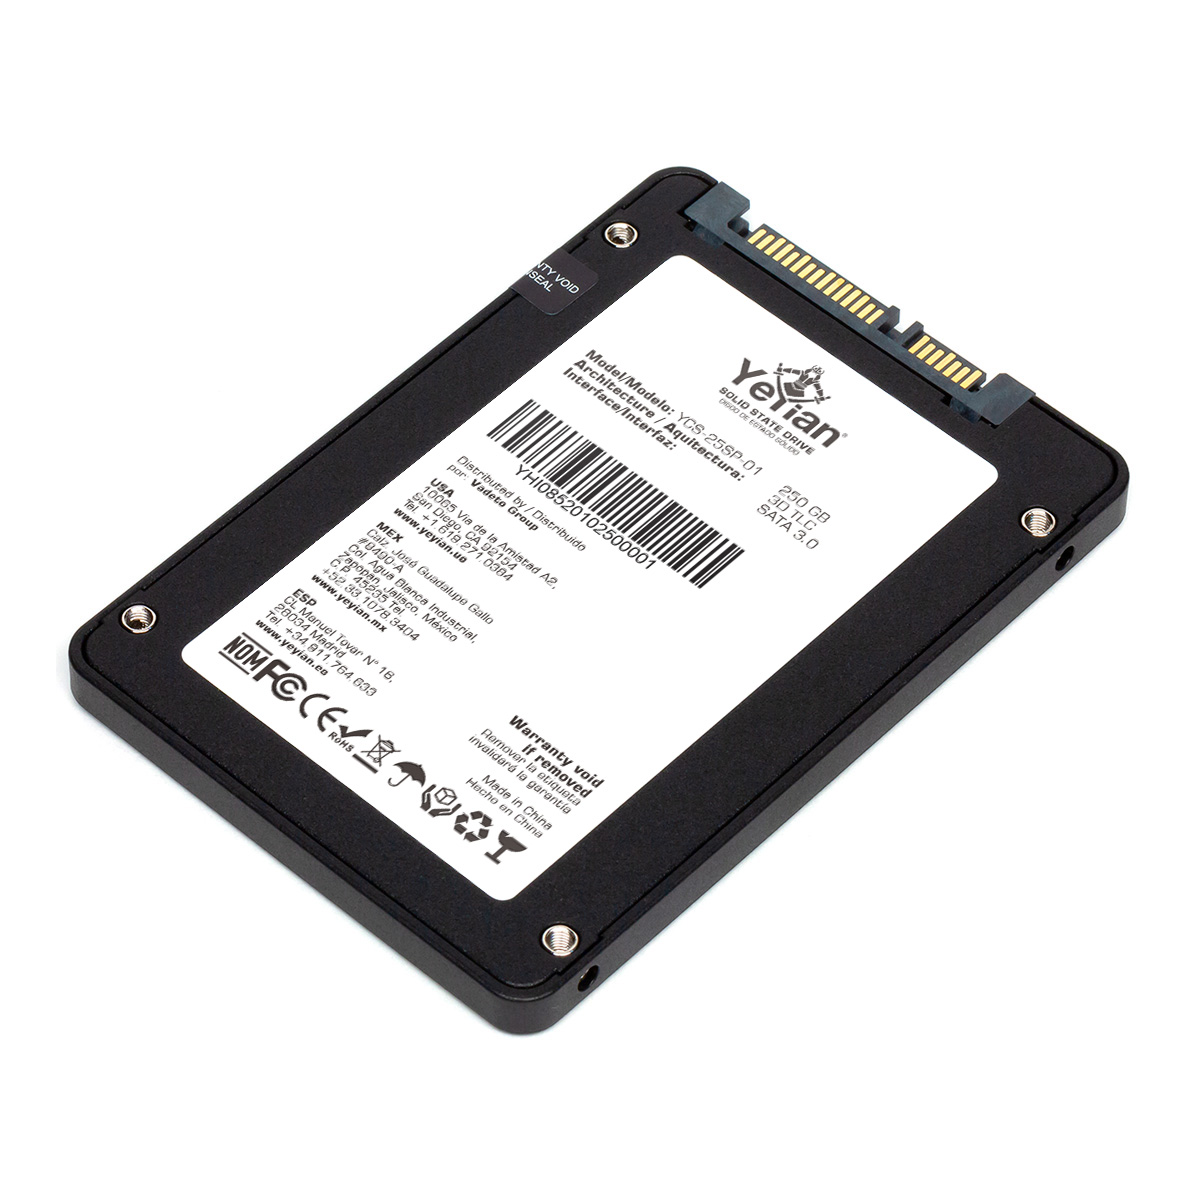 UNIDAD SSD YEYIAN VALK SERIE 3000 250GB SATA 3 YCS-25SP-01 2.5